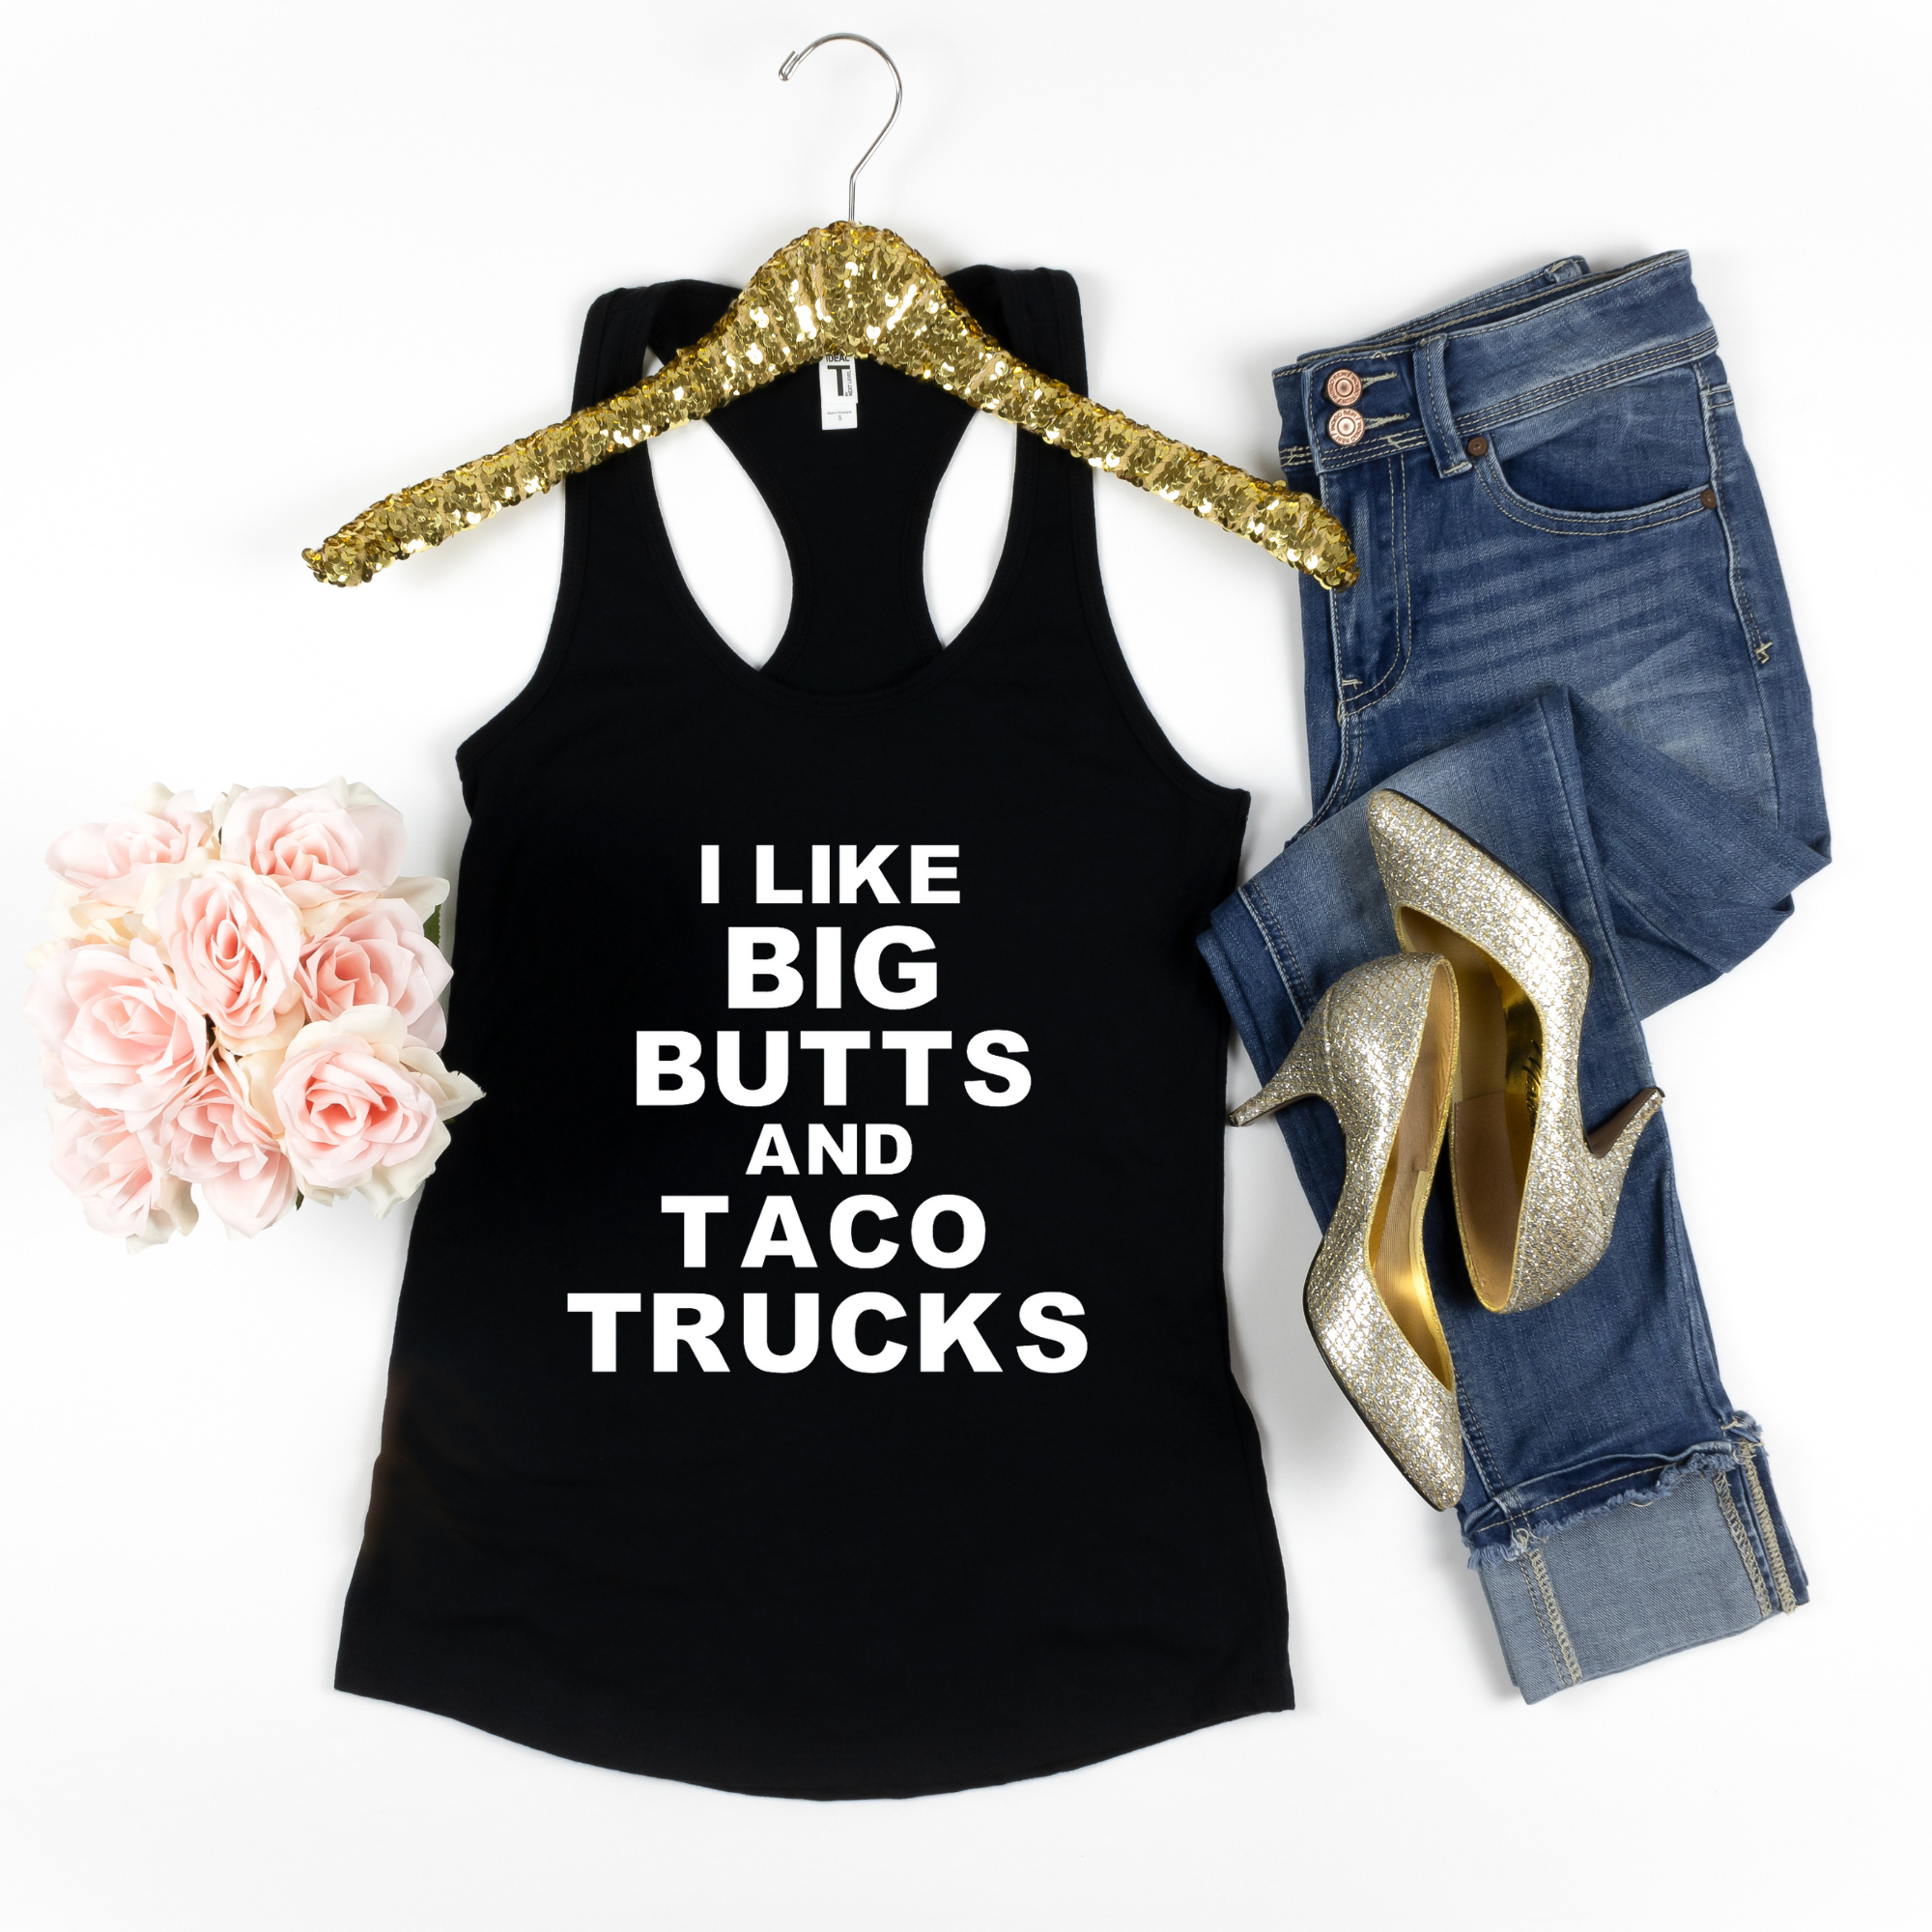 I Like Big Butts and Taco Trucks Shirt